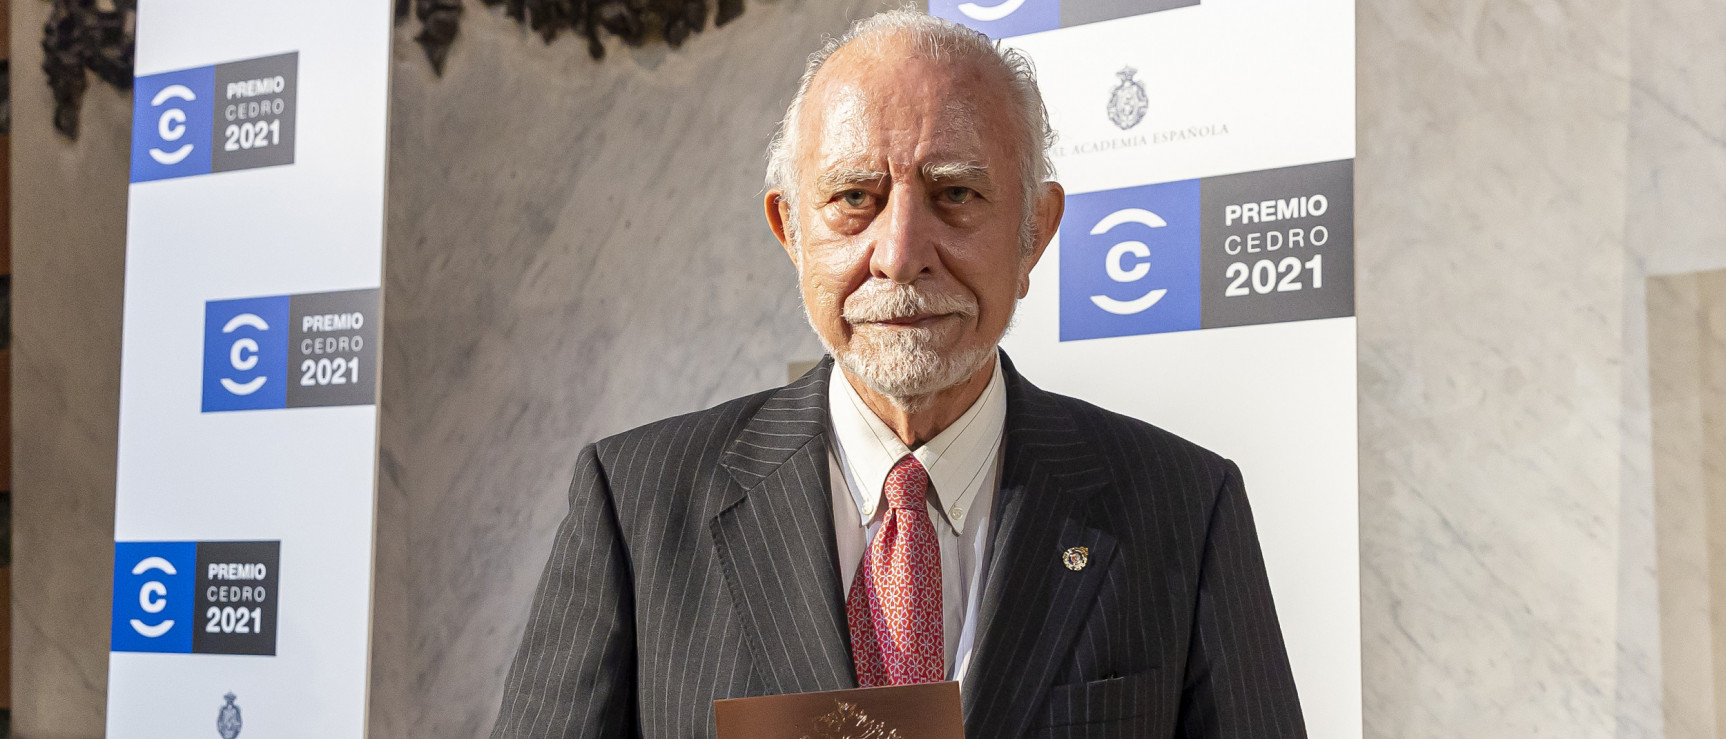 José María Merino, Premio Cedro 2021 (© CEDRO. Autor: P. Moreno)